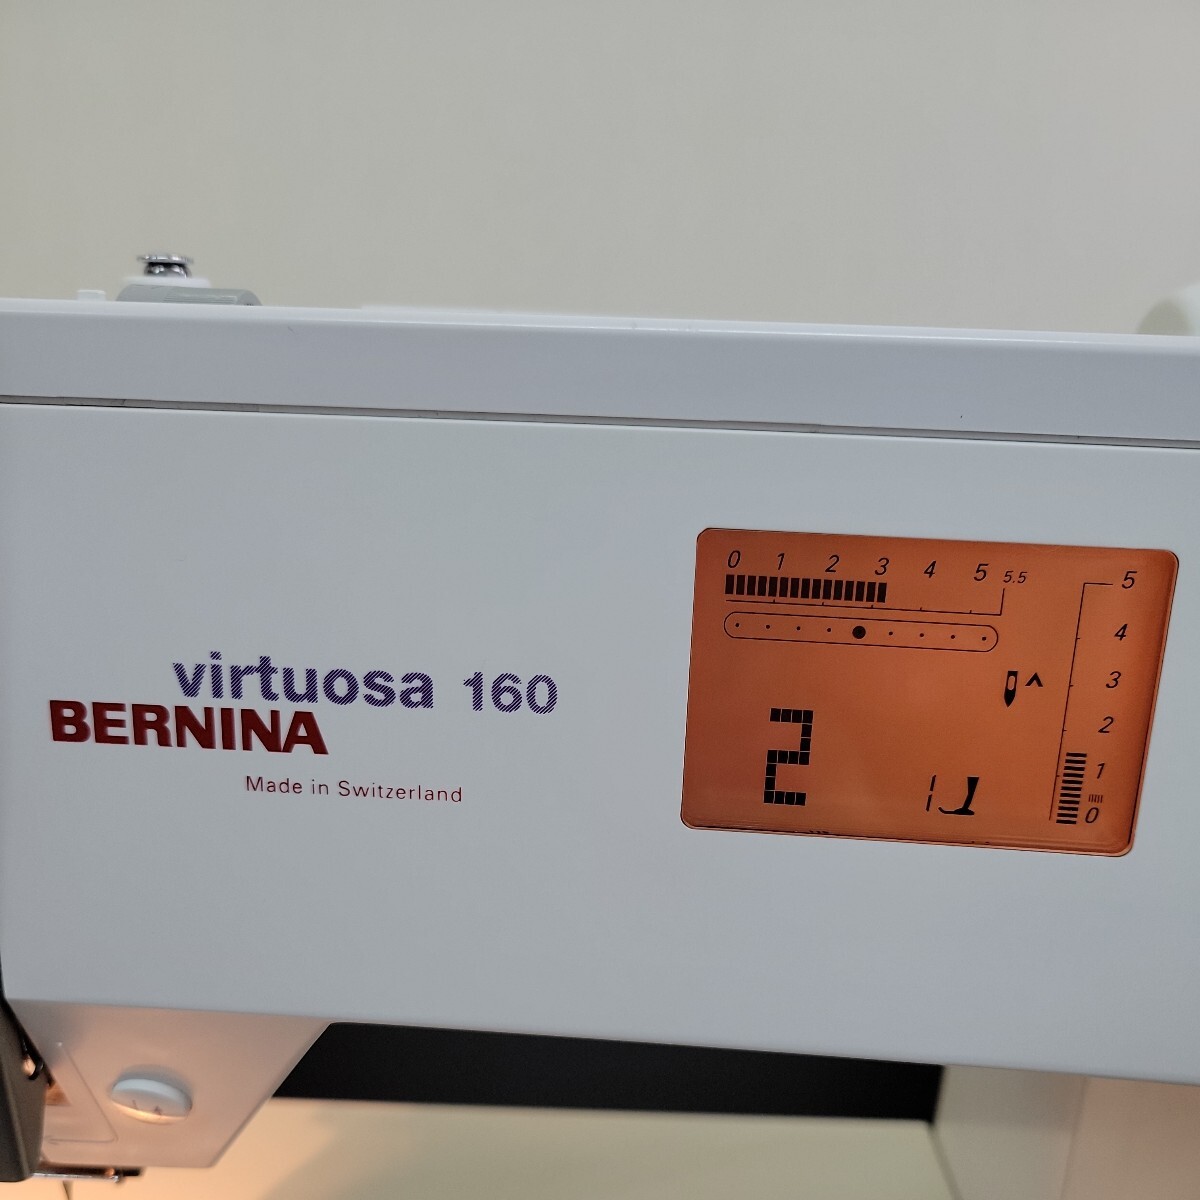 24050907 BERNINA bell Nina компьютер швейная машина virtuosa 160